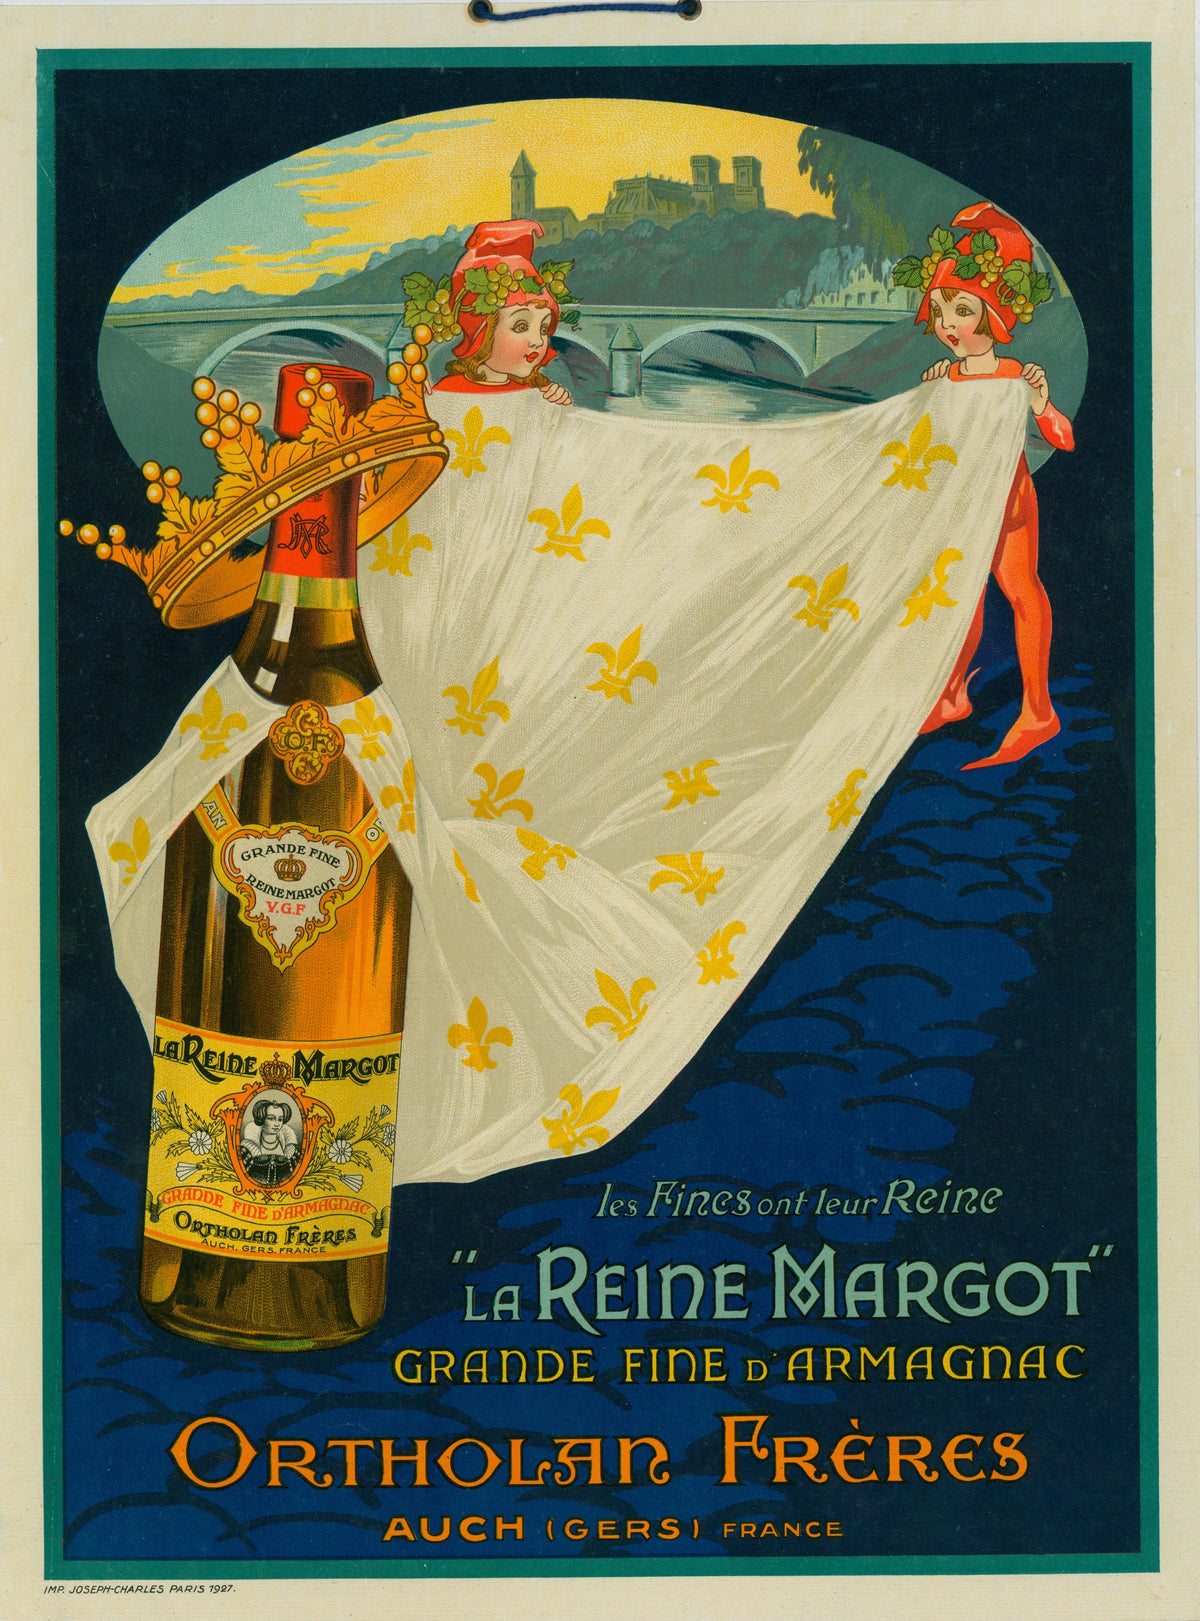 La Reine Margot - WINDOW CARD - Authentic Vintage Window Card